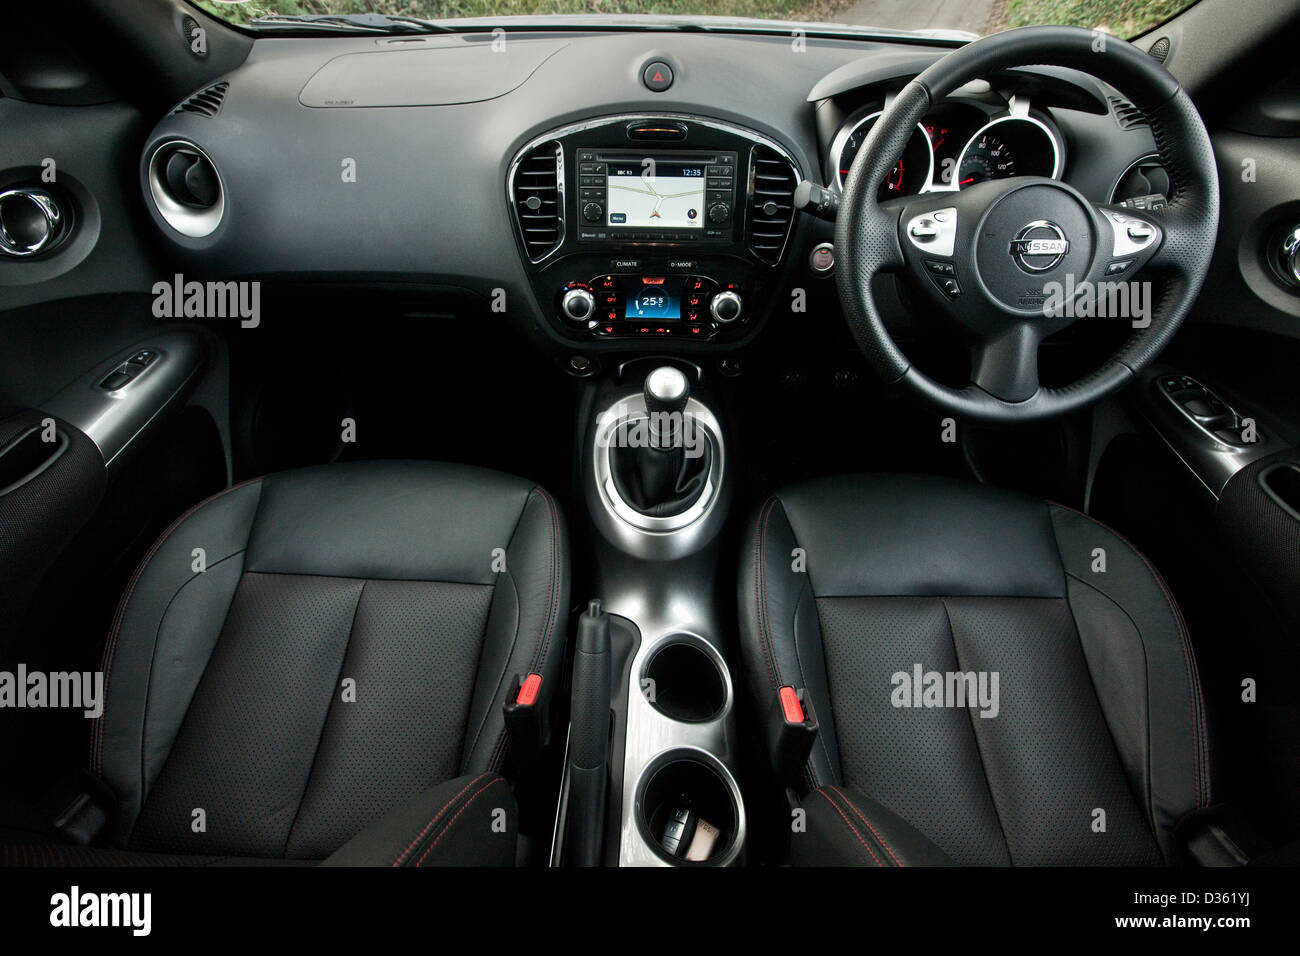 Driver and passenger seats with steering wheel in Nissan Juke Mini SUV, Southampton, UK, 1 11 2010 Stock Photo